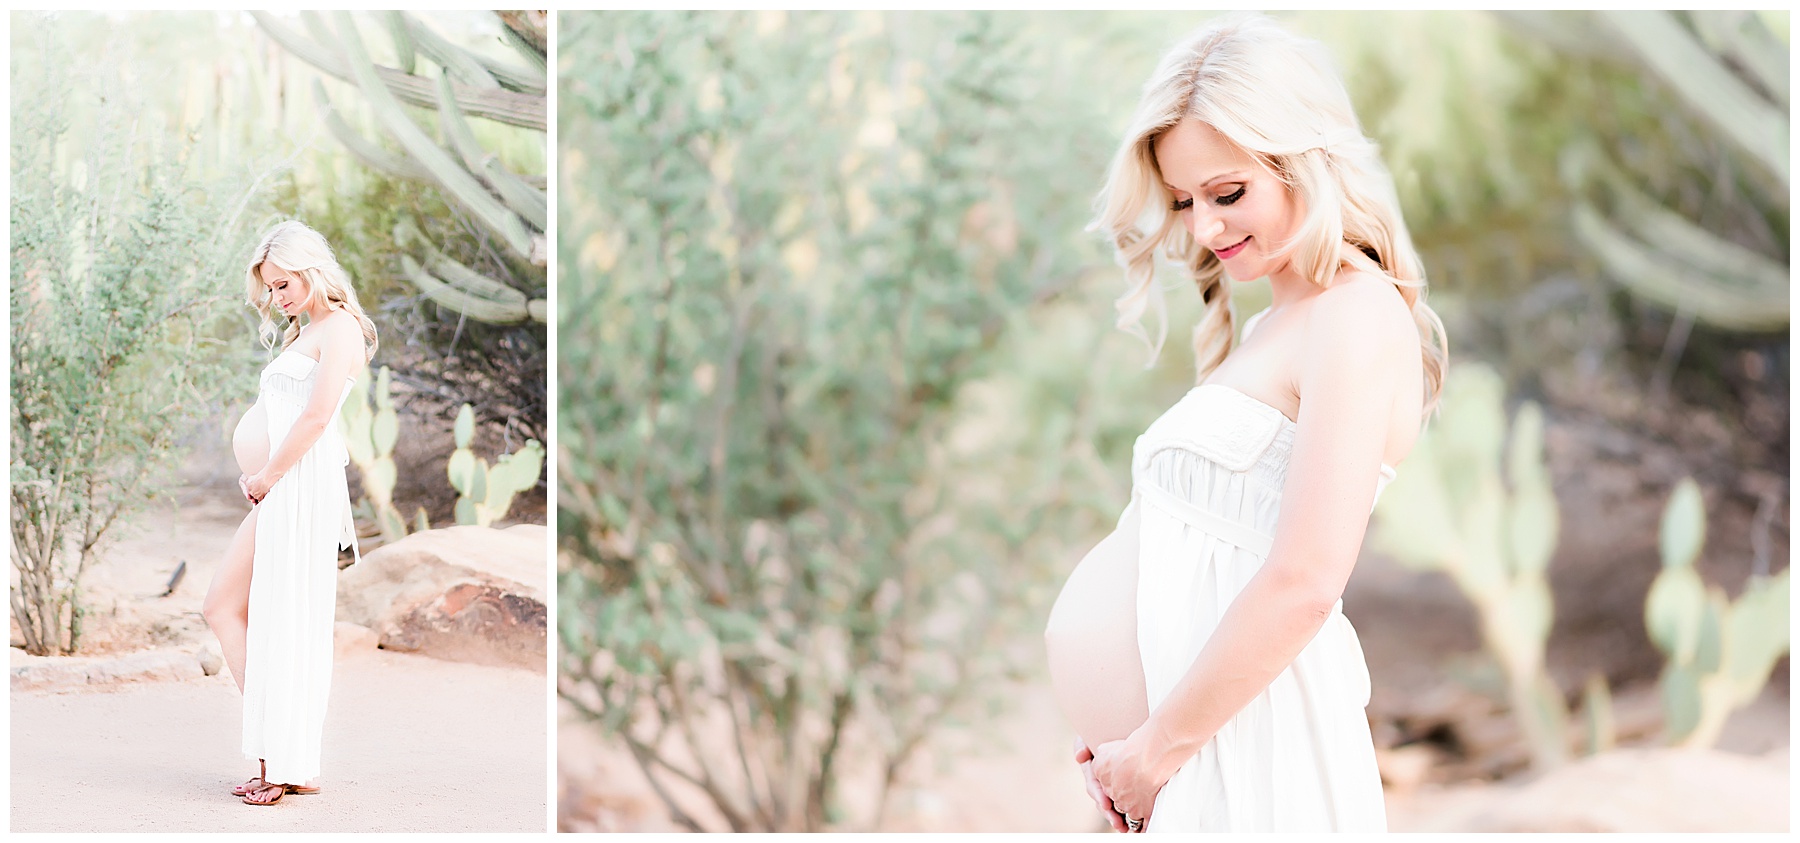 Dorota's-Maternity-Session-Phoenix-Arizona-Ashley-Flug-Photography34-Recovered.jpg